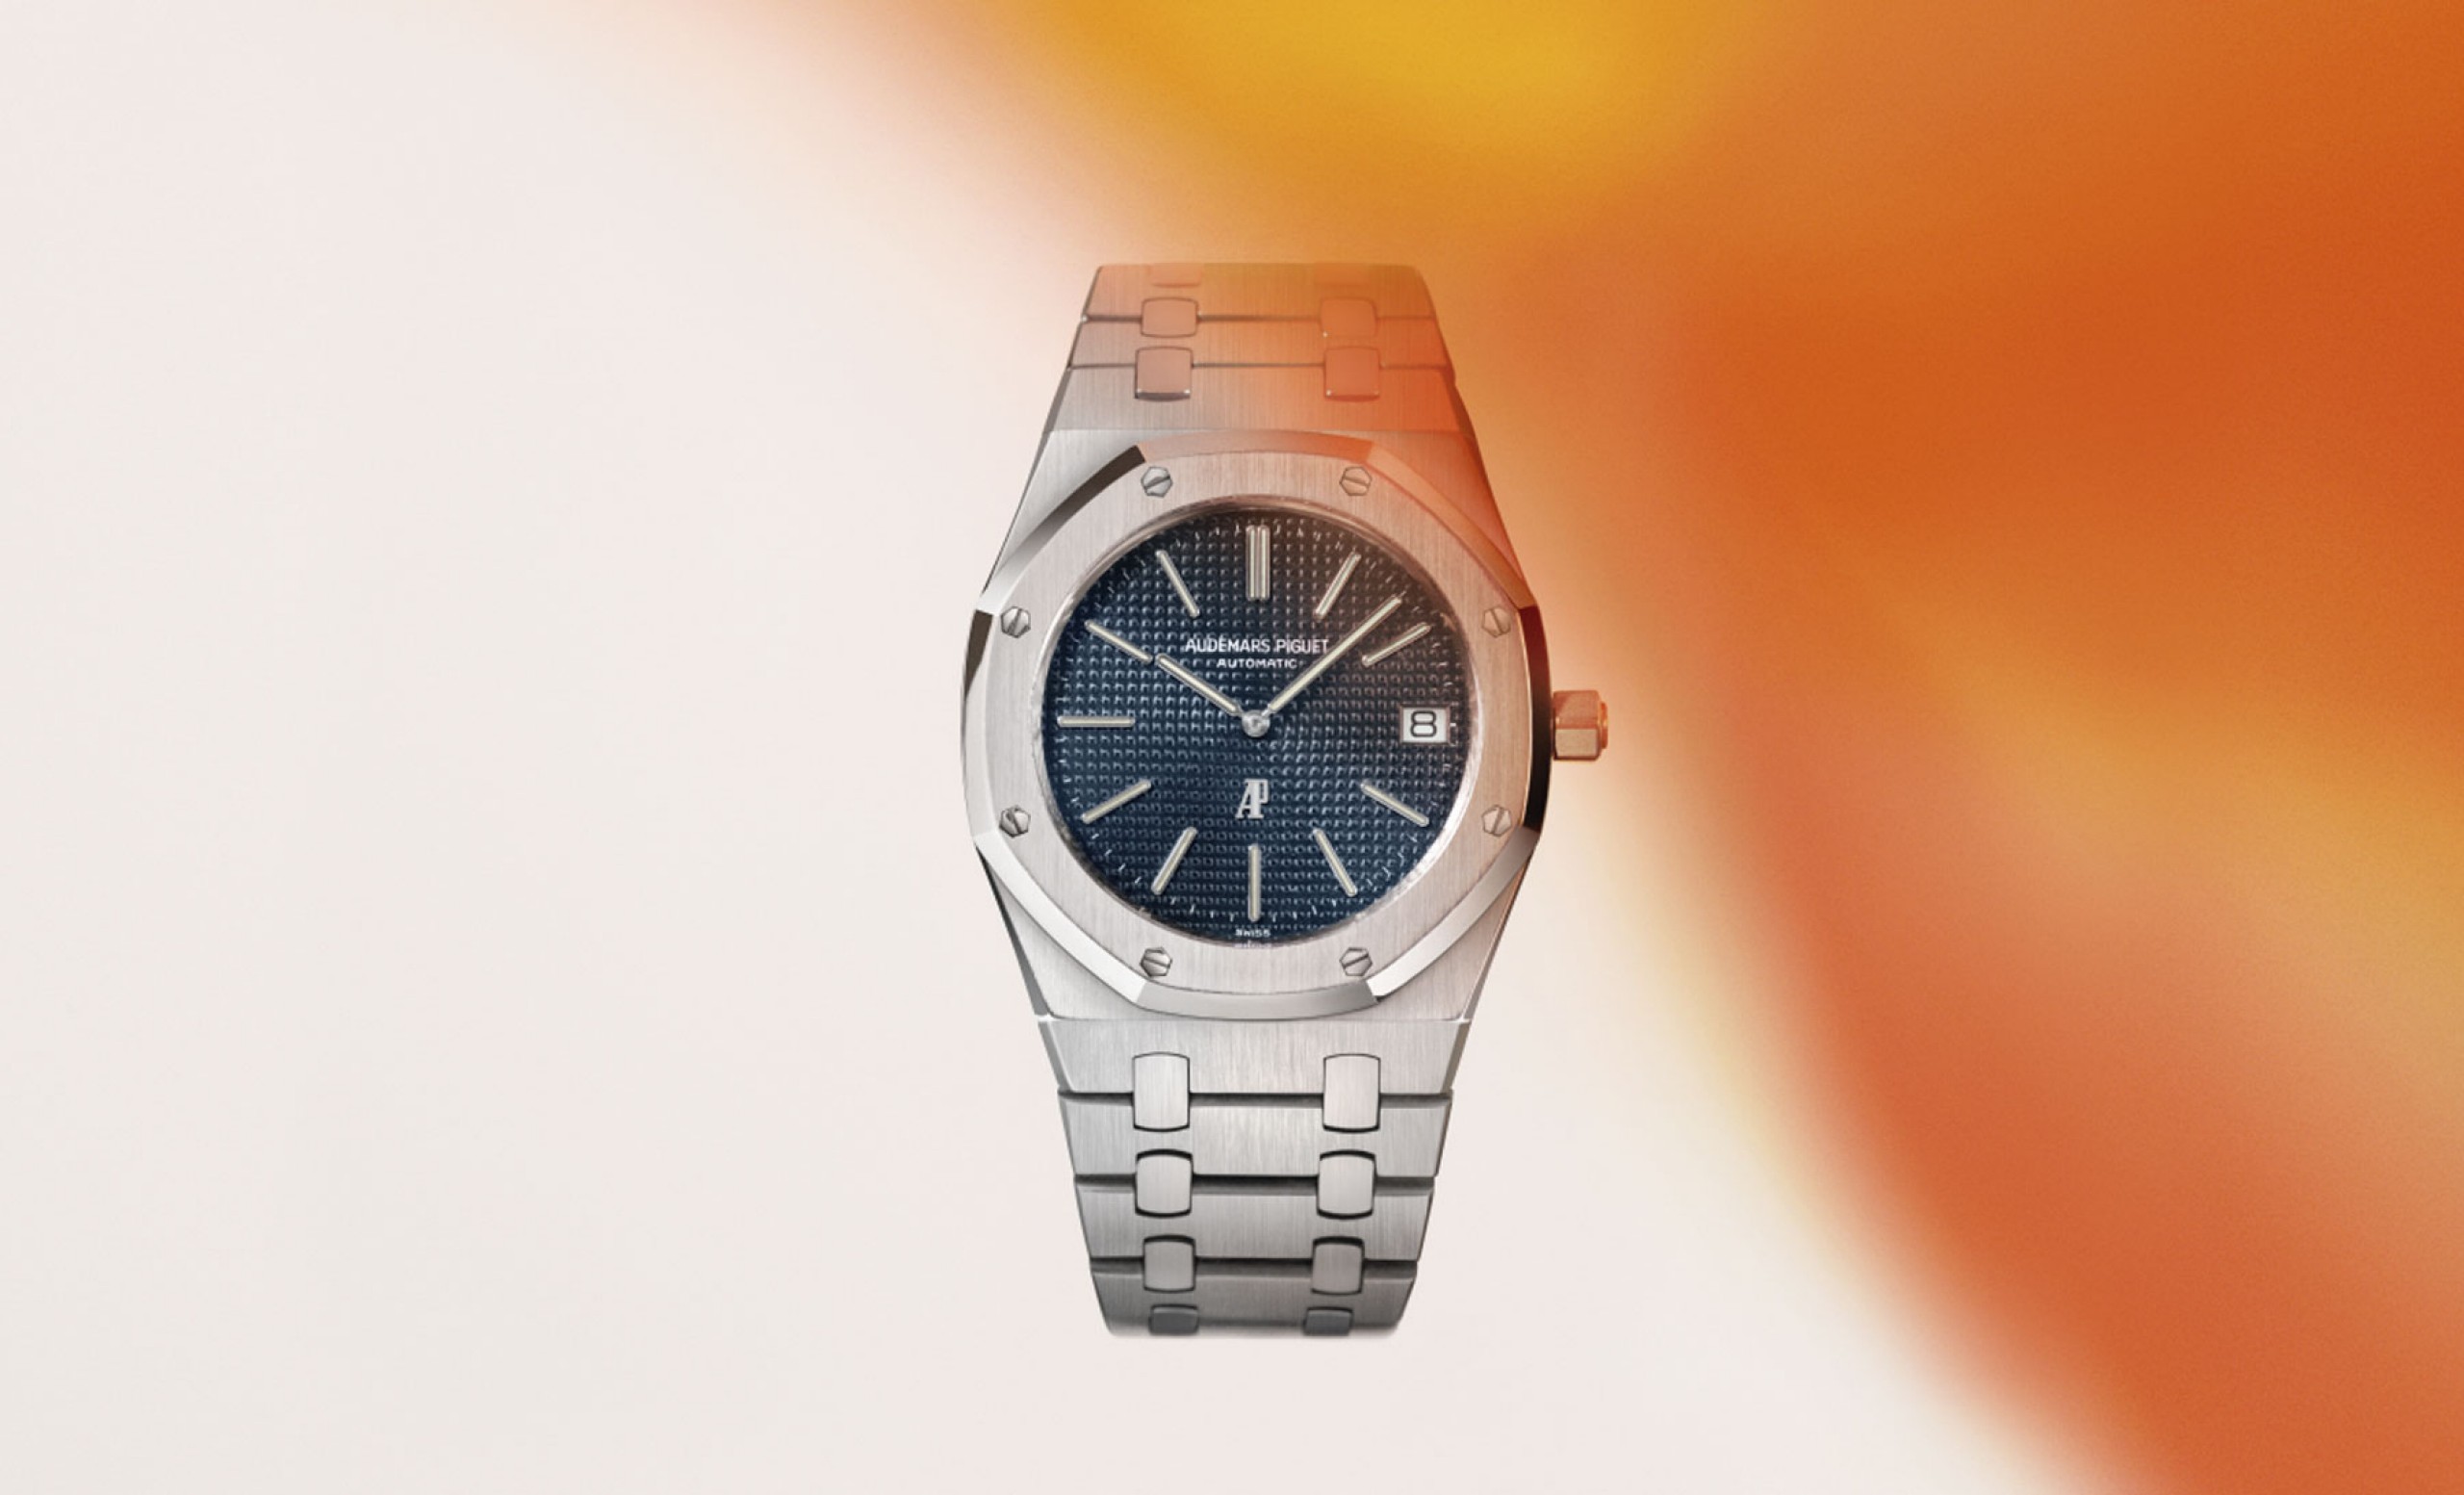 Audemars Piguet Royal Oak at 50: The Evolution of an Iconic Watch